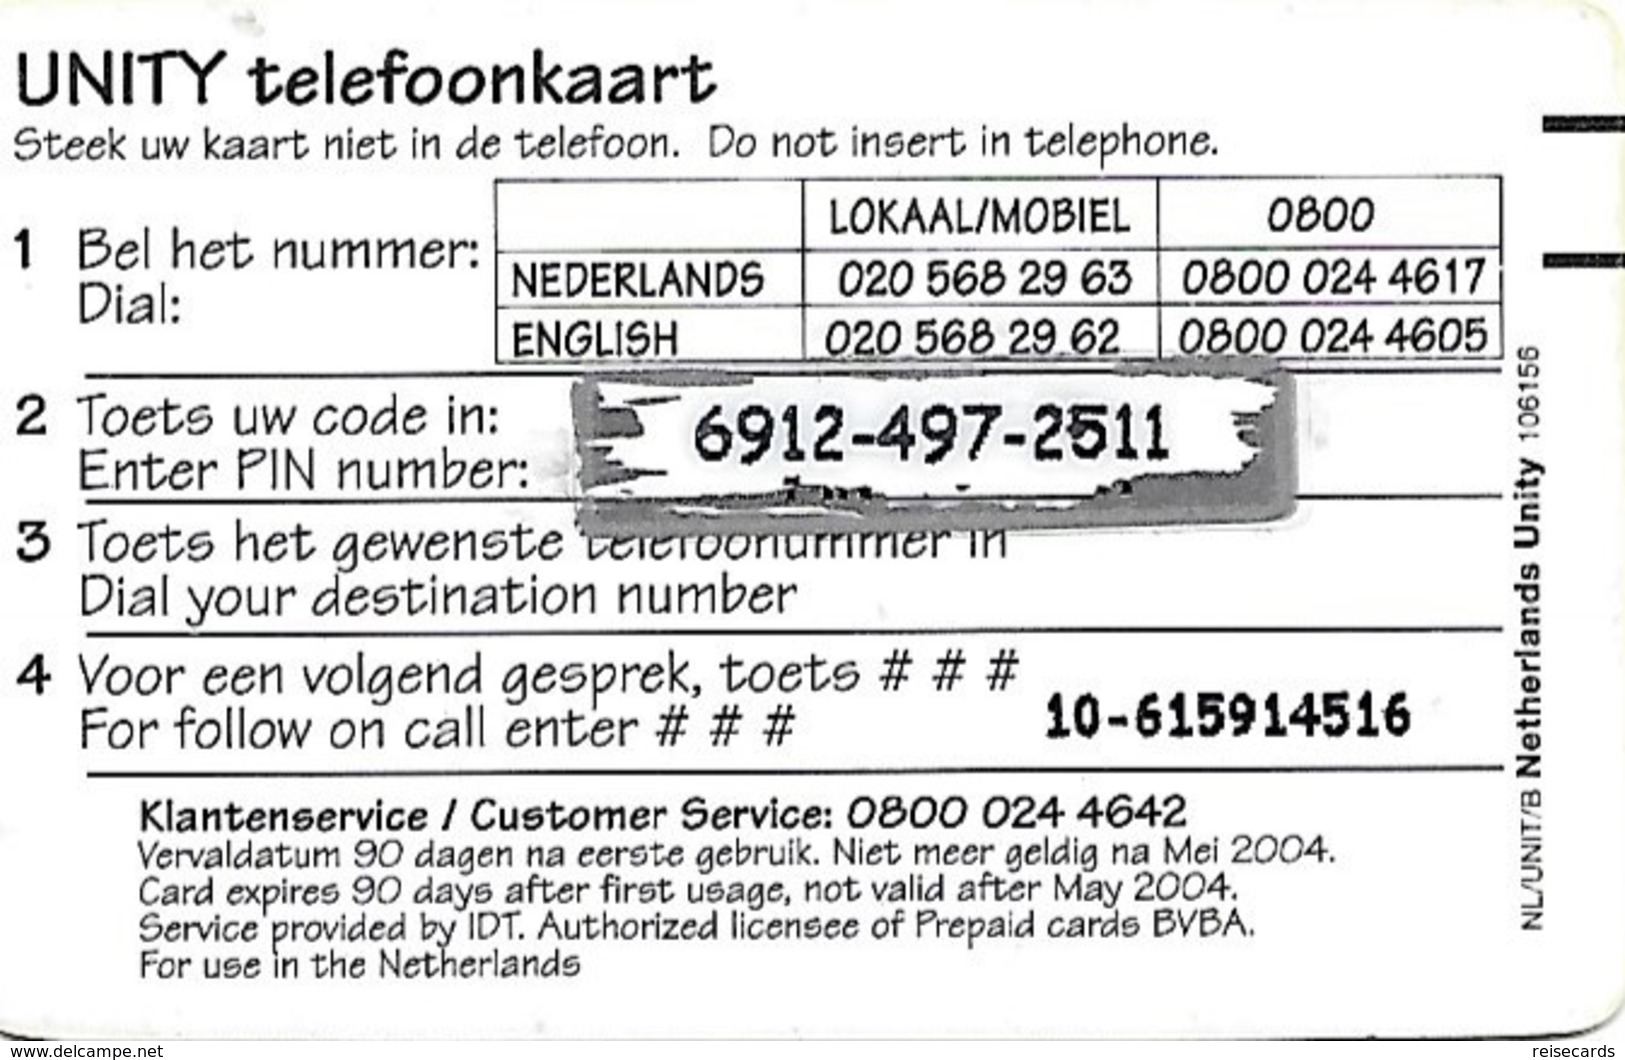 Netherlands: Prepaid IDT - Unity 05.04 - [3] Sim Cards, Prepaid & Refills